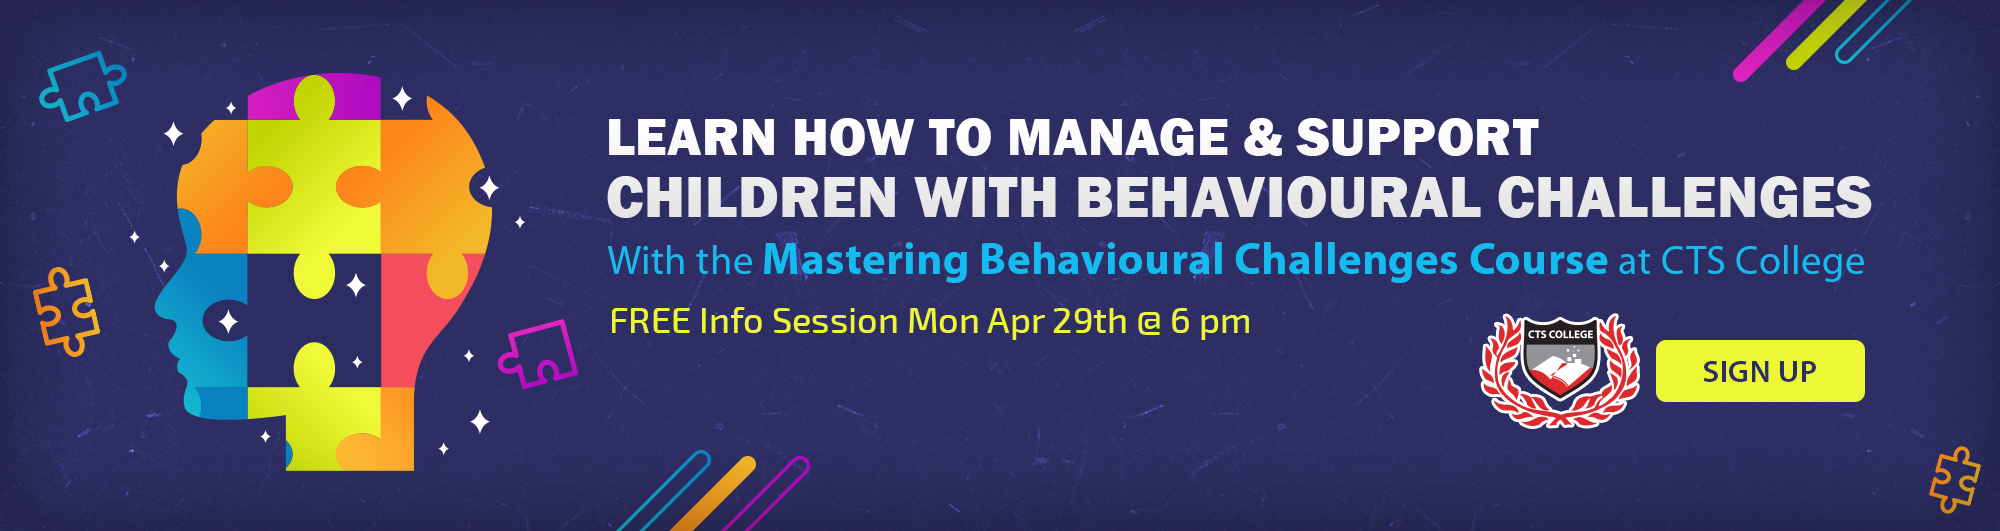 Mastering Behavioural Challenges